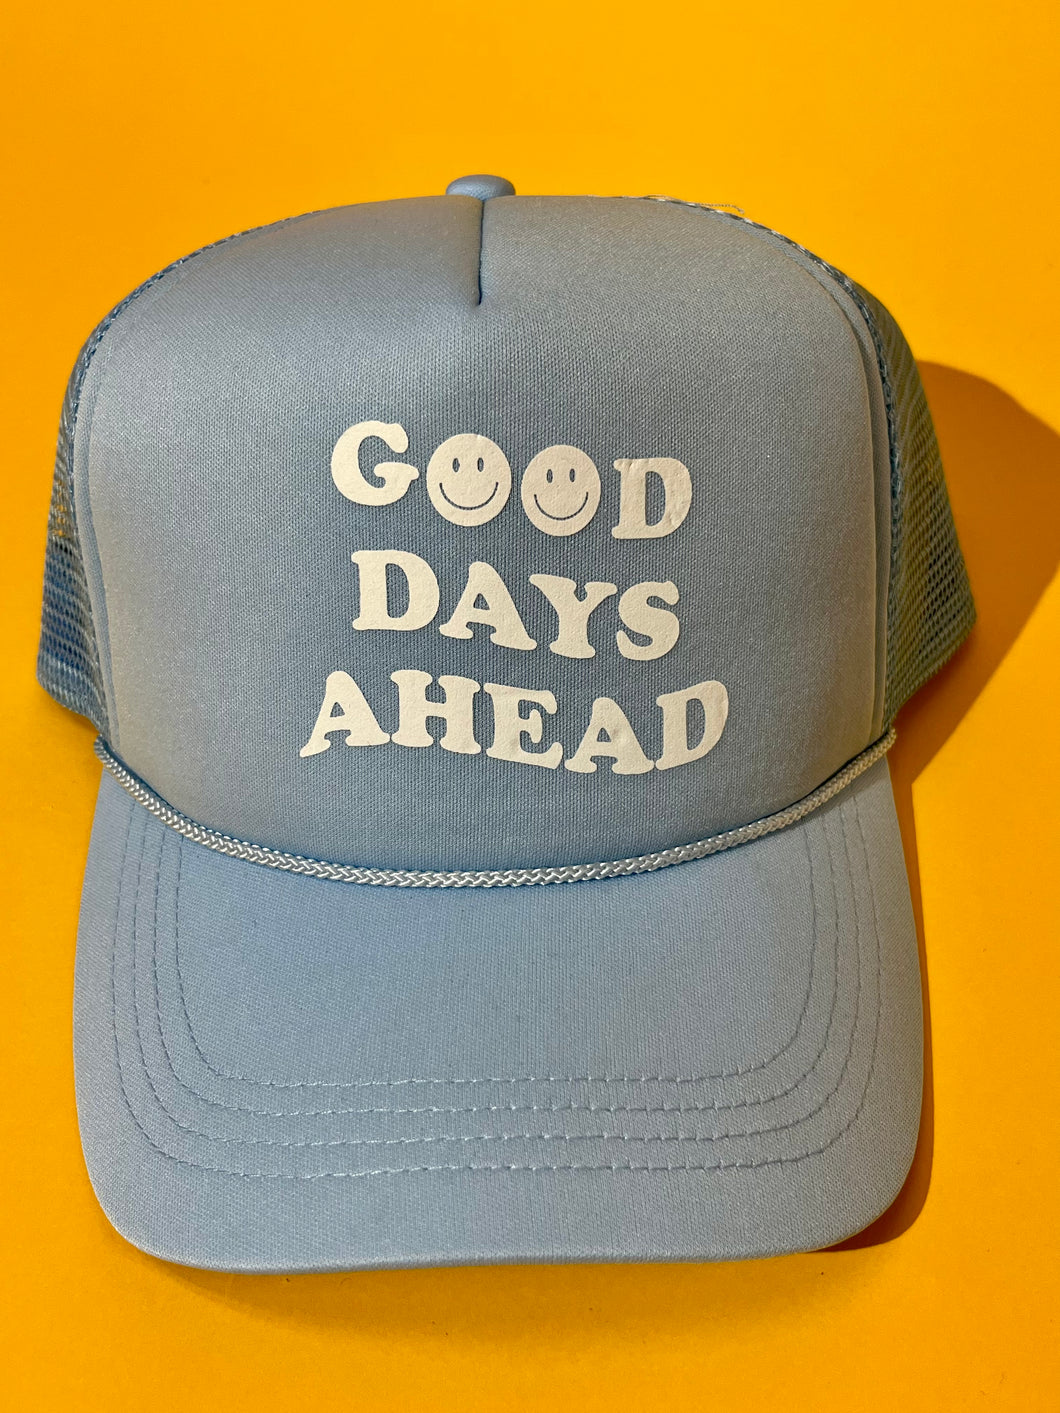 Good days ahead baby blue trucker hat